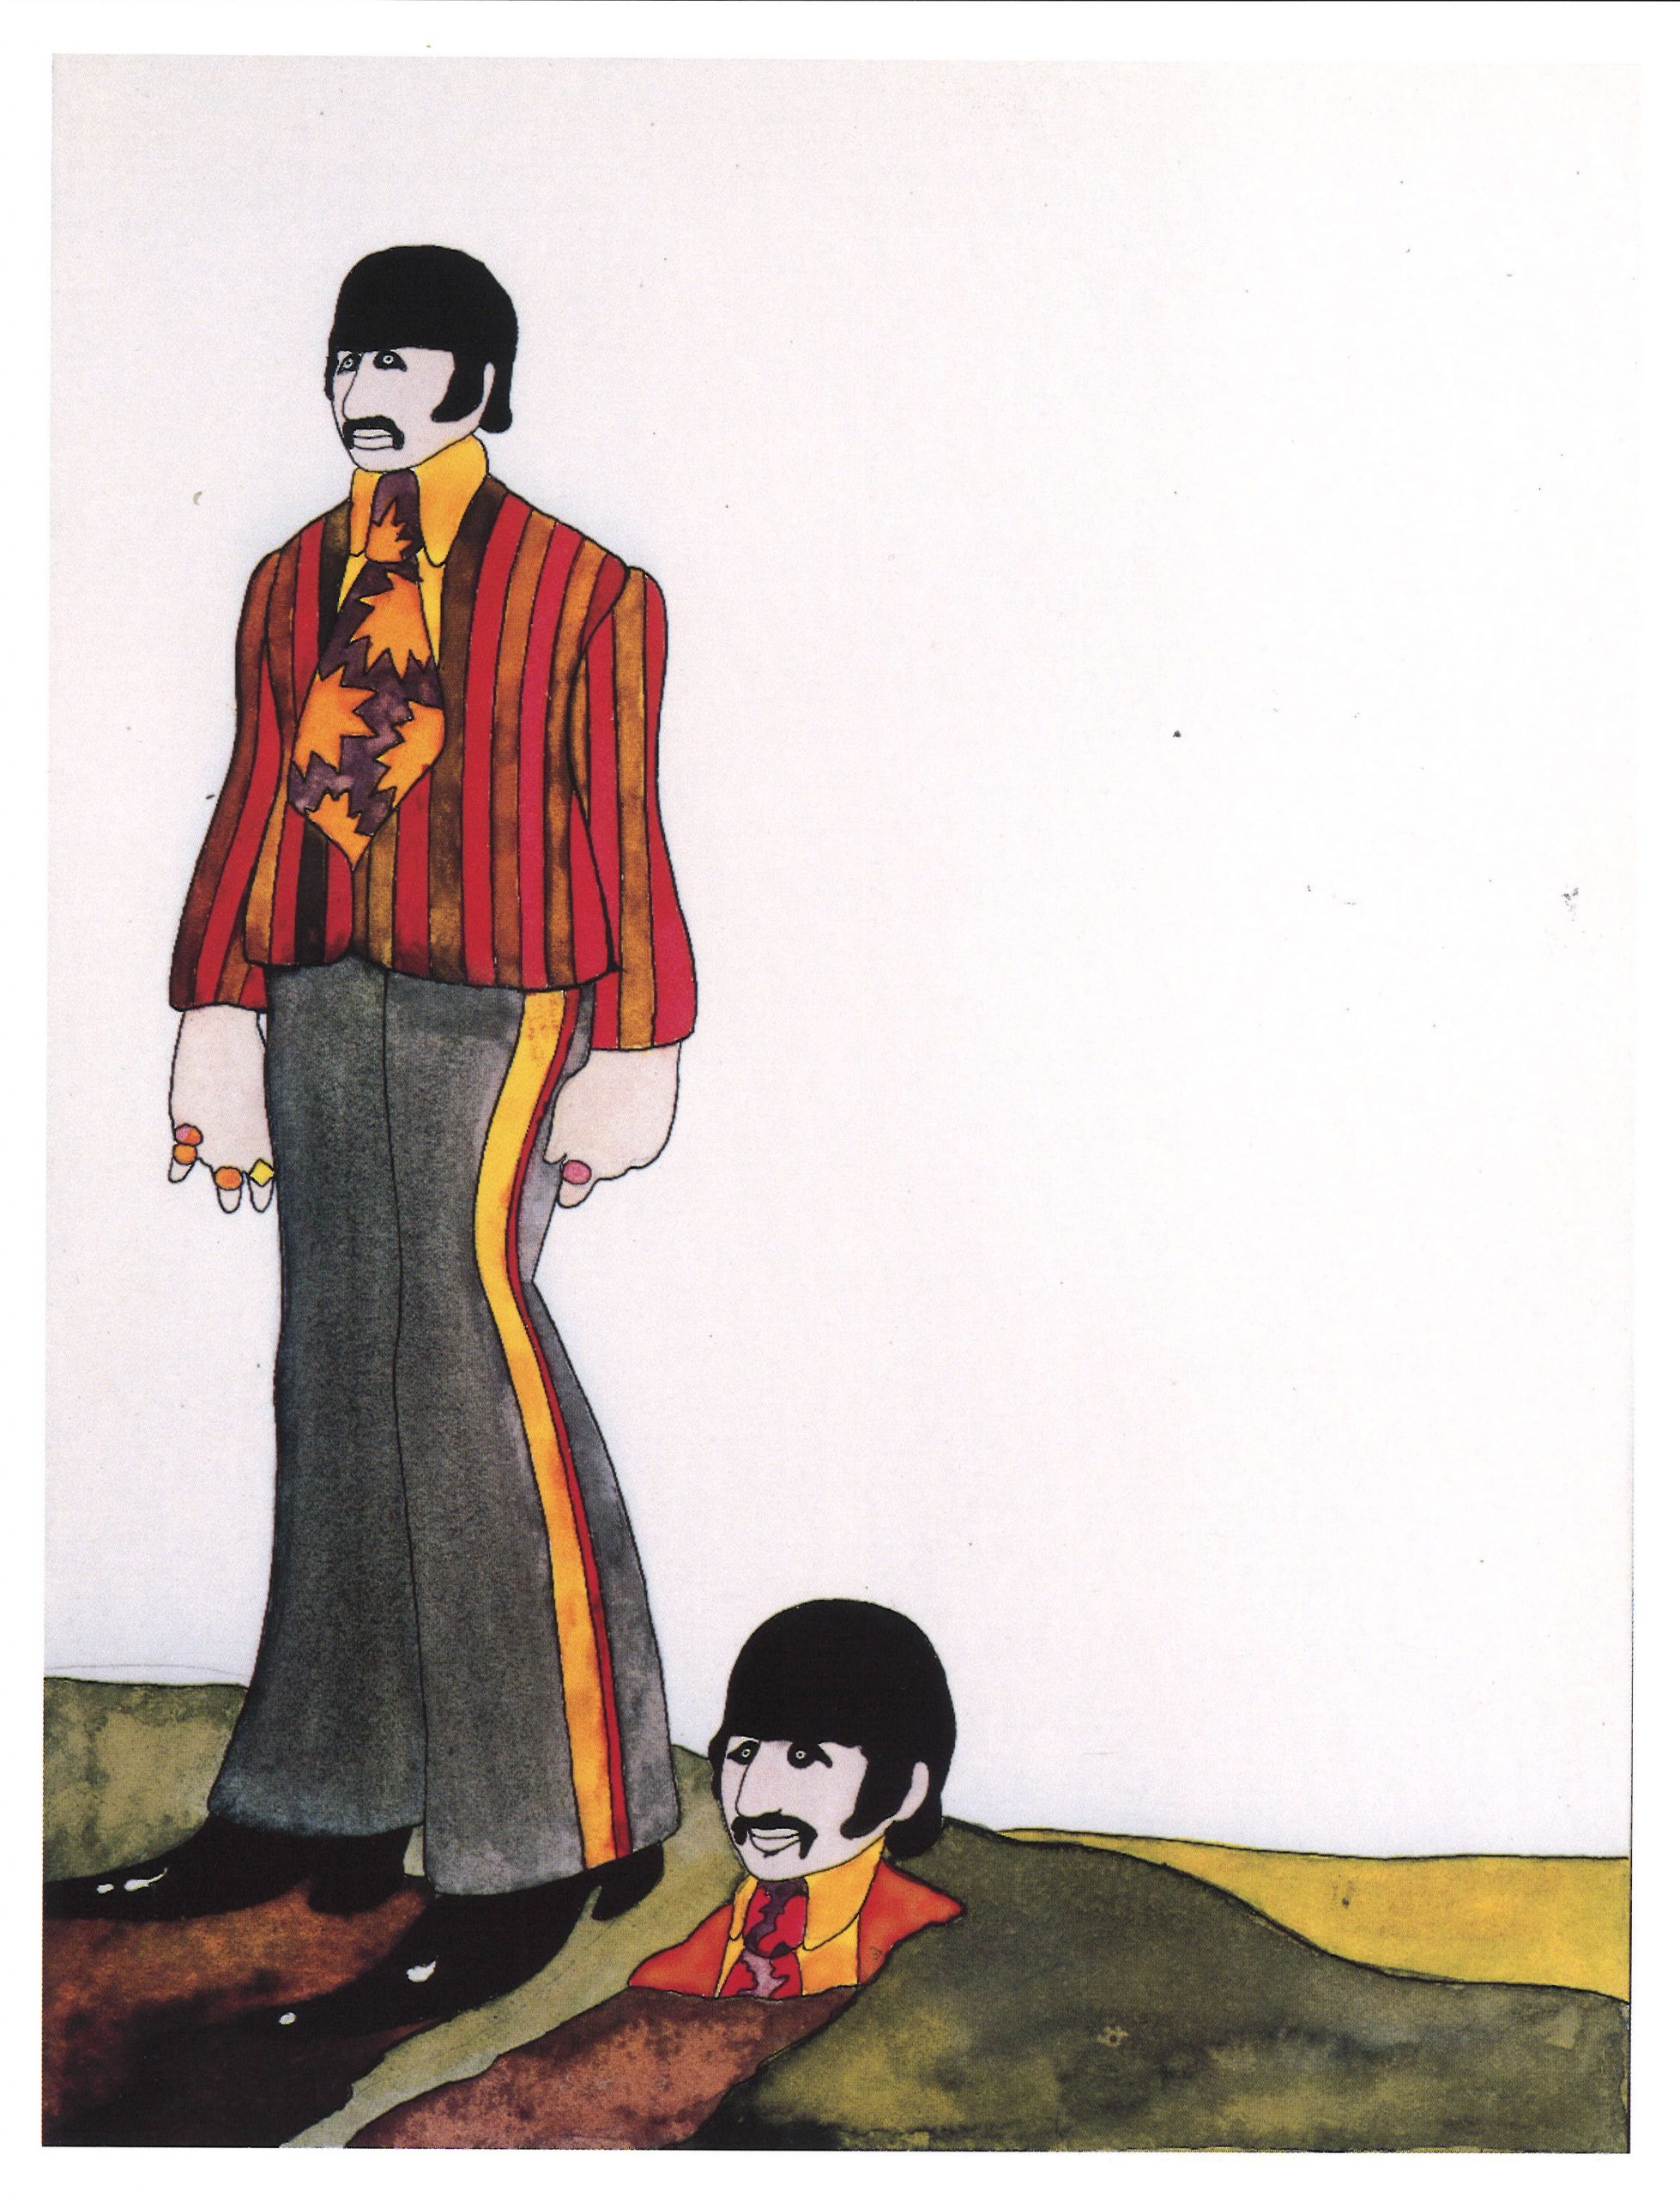 Heinz Edelmann design reprint of Ringo Starr